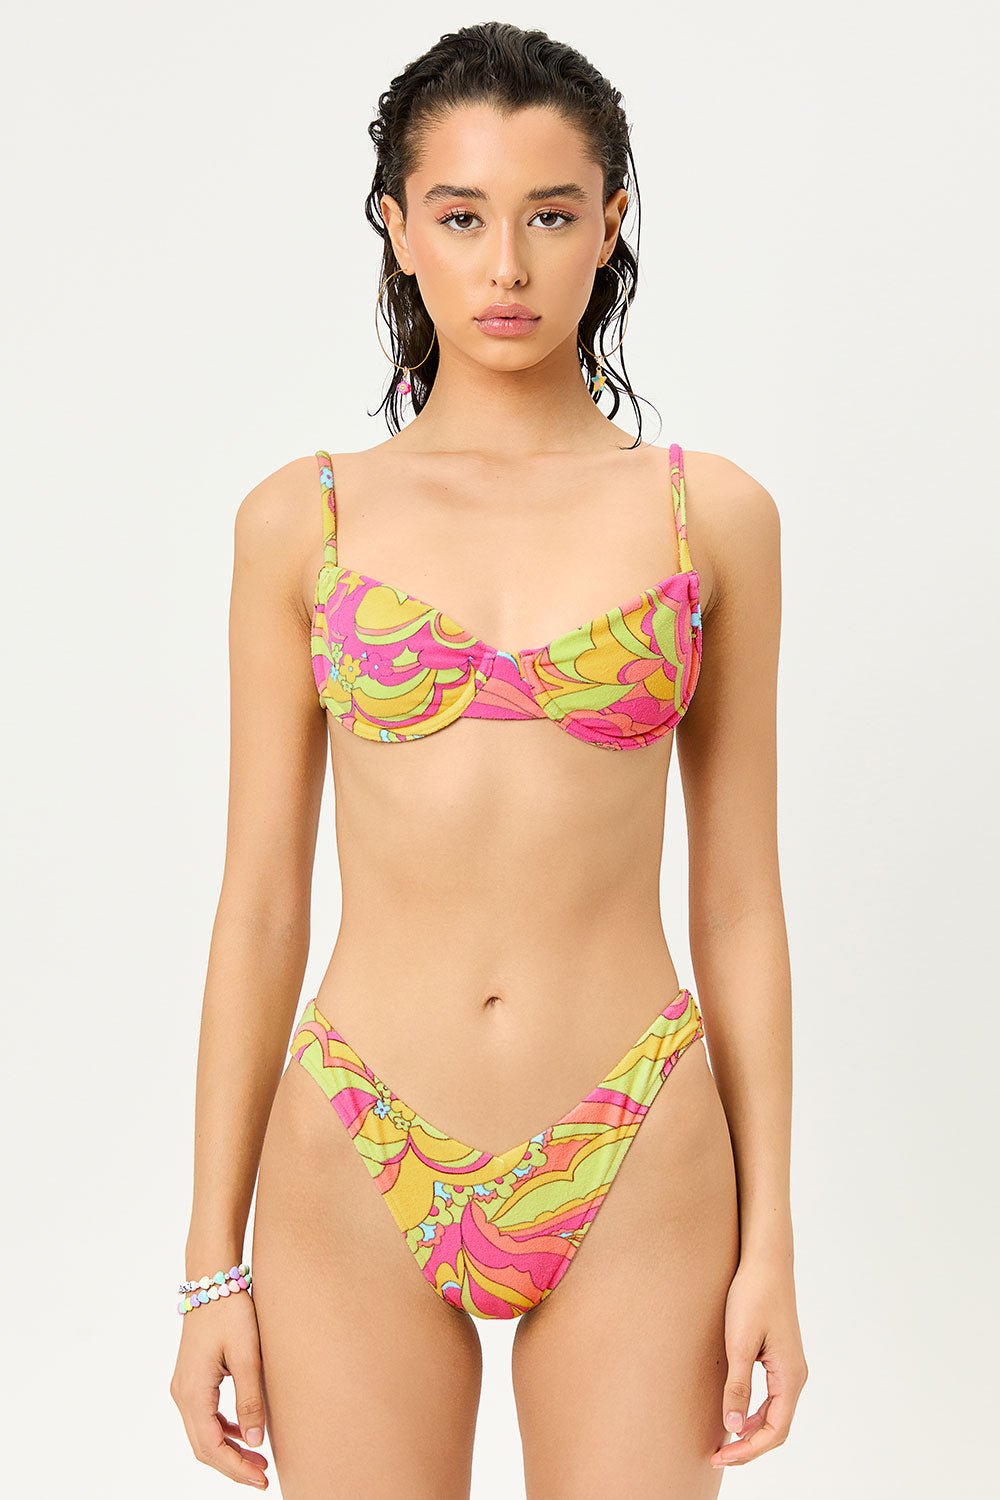 The Key West Terry - Underwire Bikini Top by Watercolors Swim